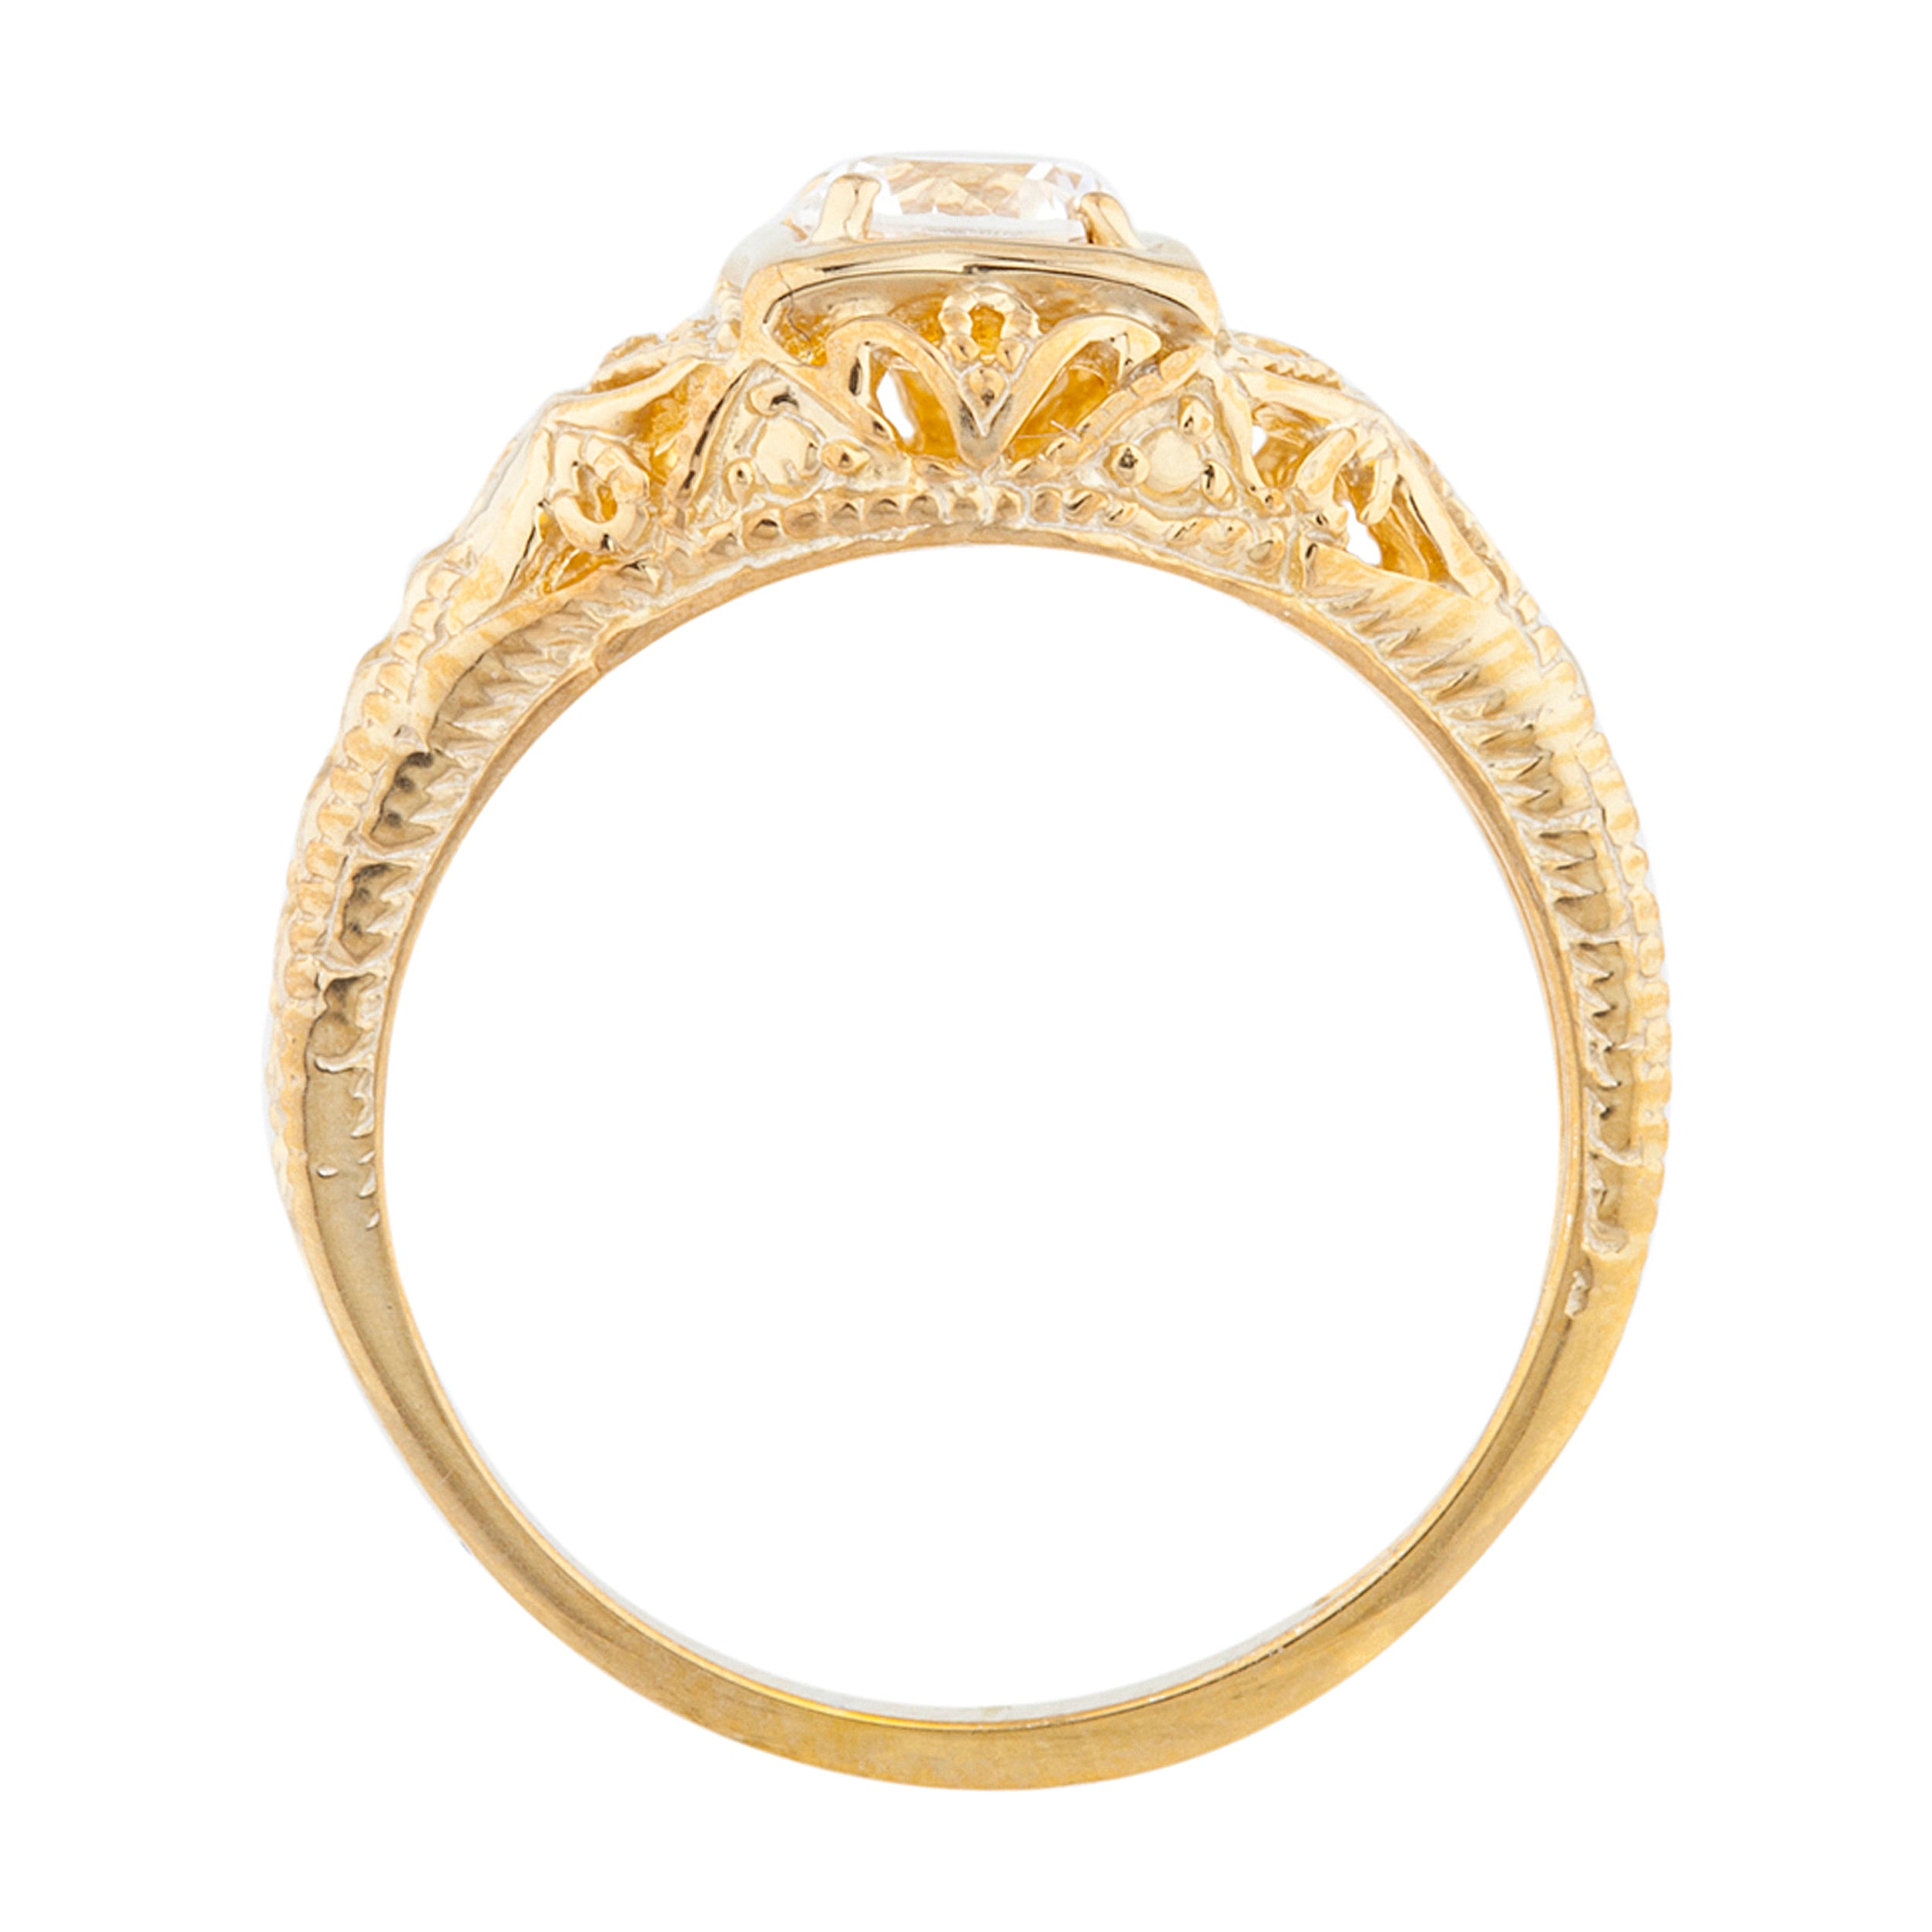 14Kt Gold Natural Blue Mystic Topaz & Diamond Design Round Ring